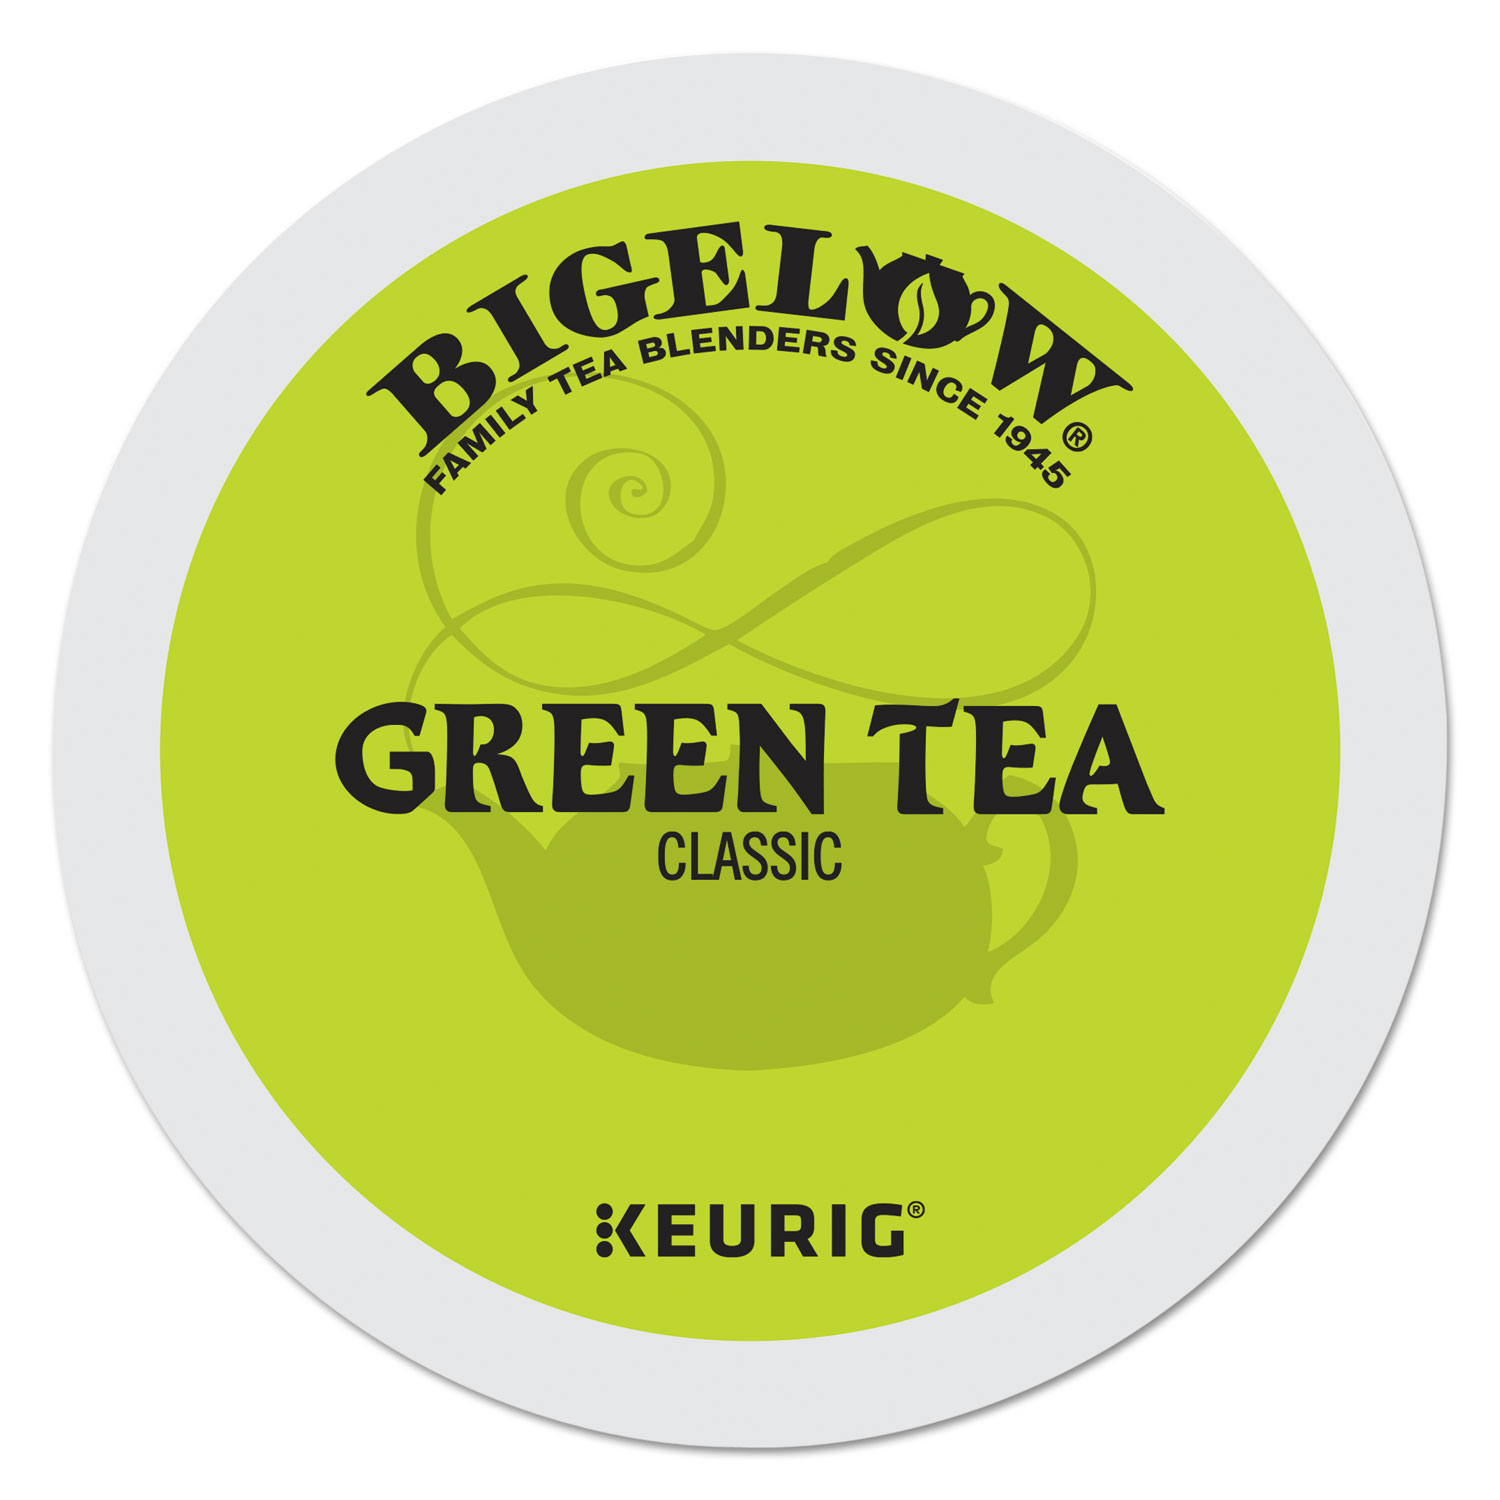 Green Tea K-Cup Pack, 24/Box, 4 Box/Carton